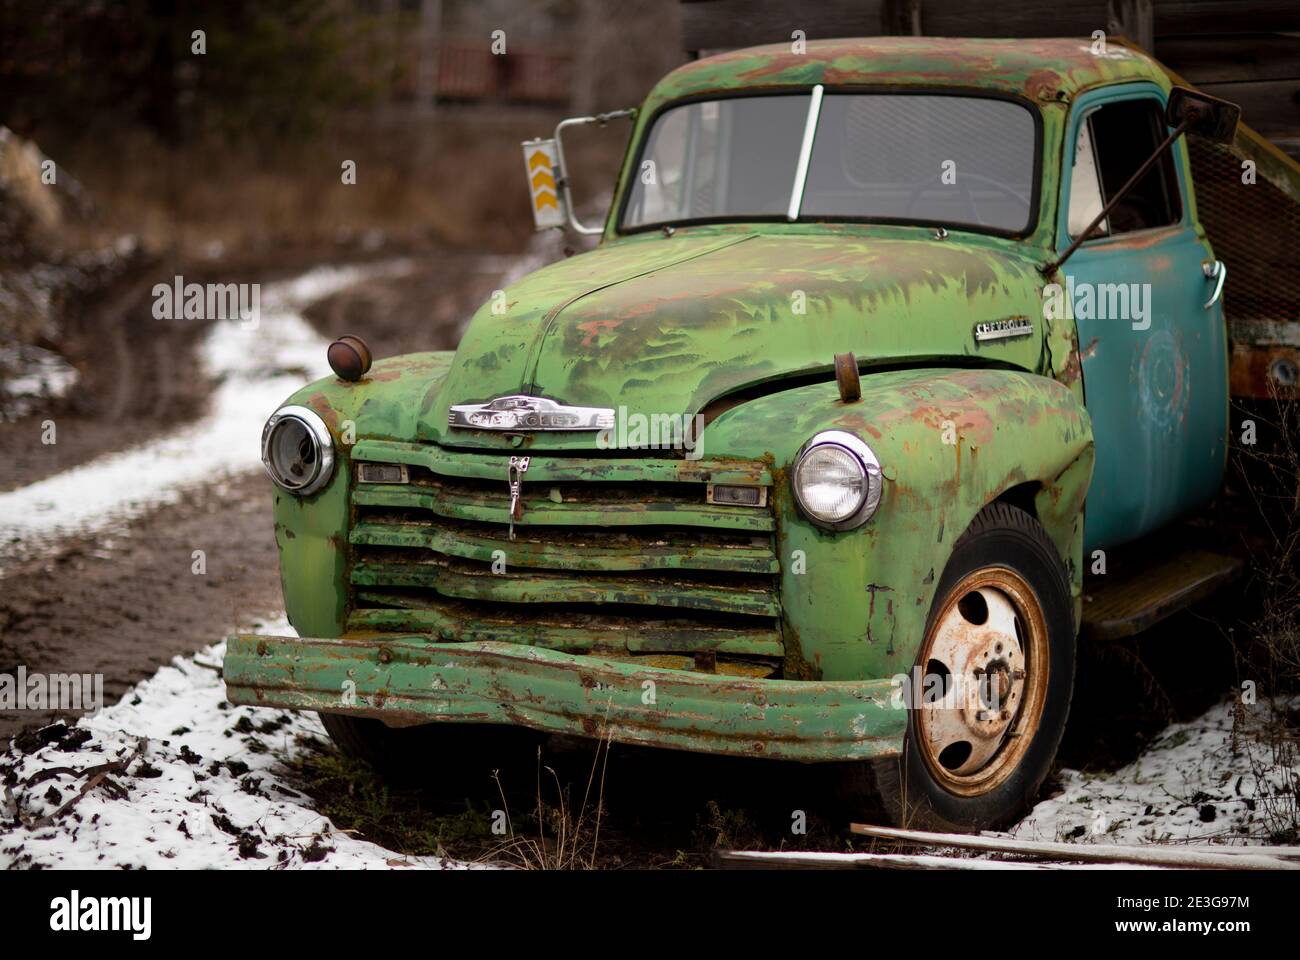 Ein grüner, Anfang 1949 Chevrolet Loadmaster 1 Tonne Pfahlkarosserie, in einem Sägewerk, in Troy, Montana, USA. Chevrolet Advance-Design cab Trucks waren m Stockfoto